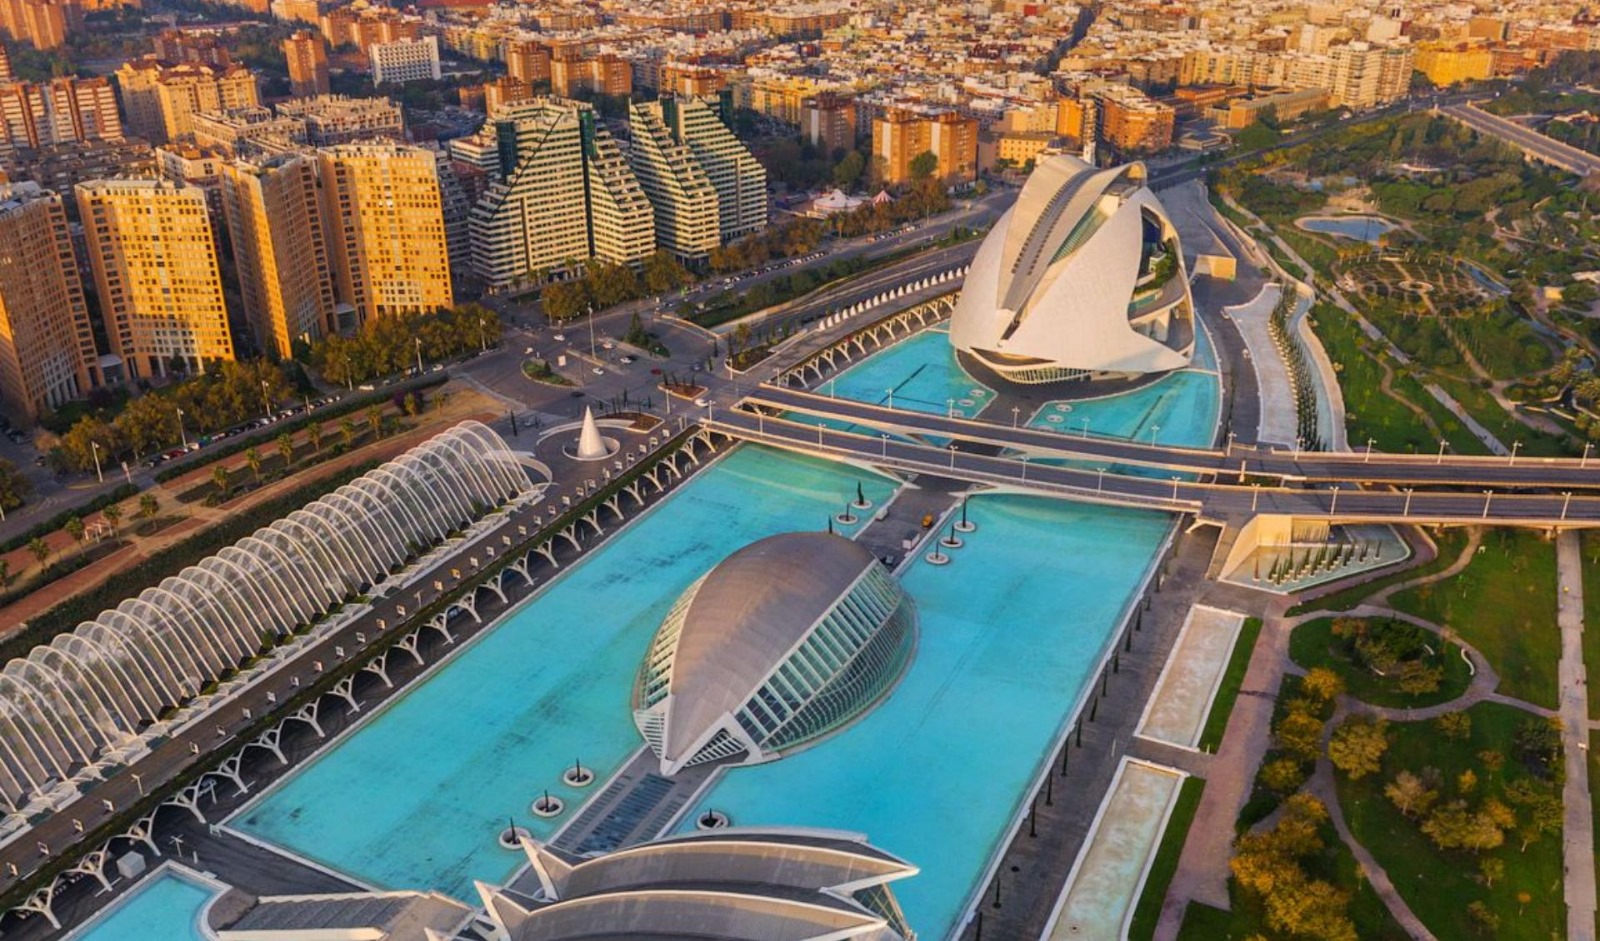 Valencia's main attractions